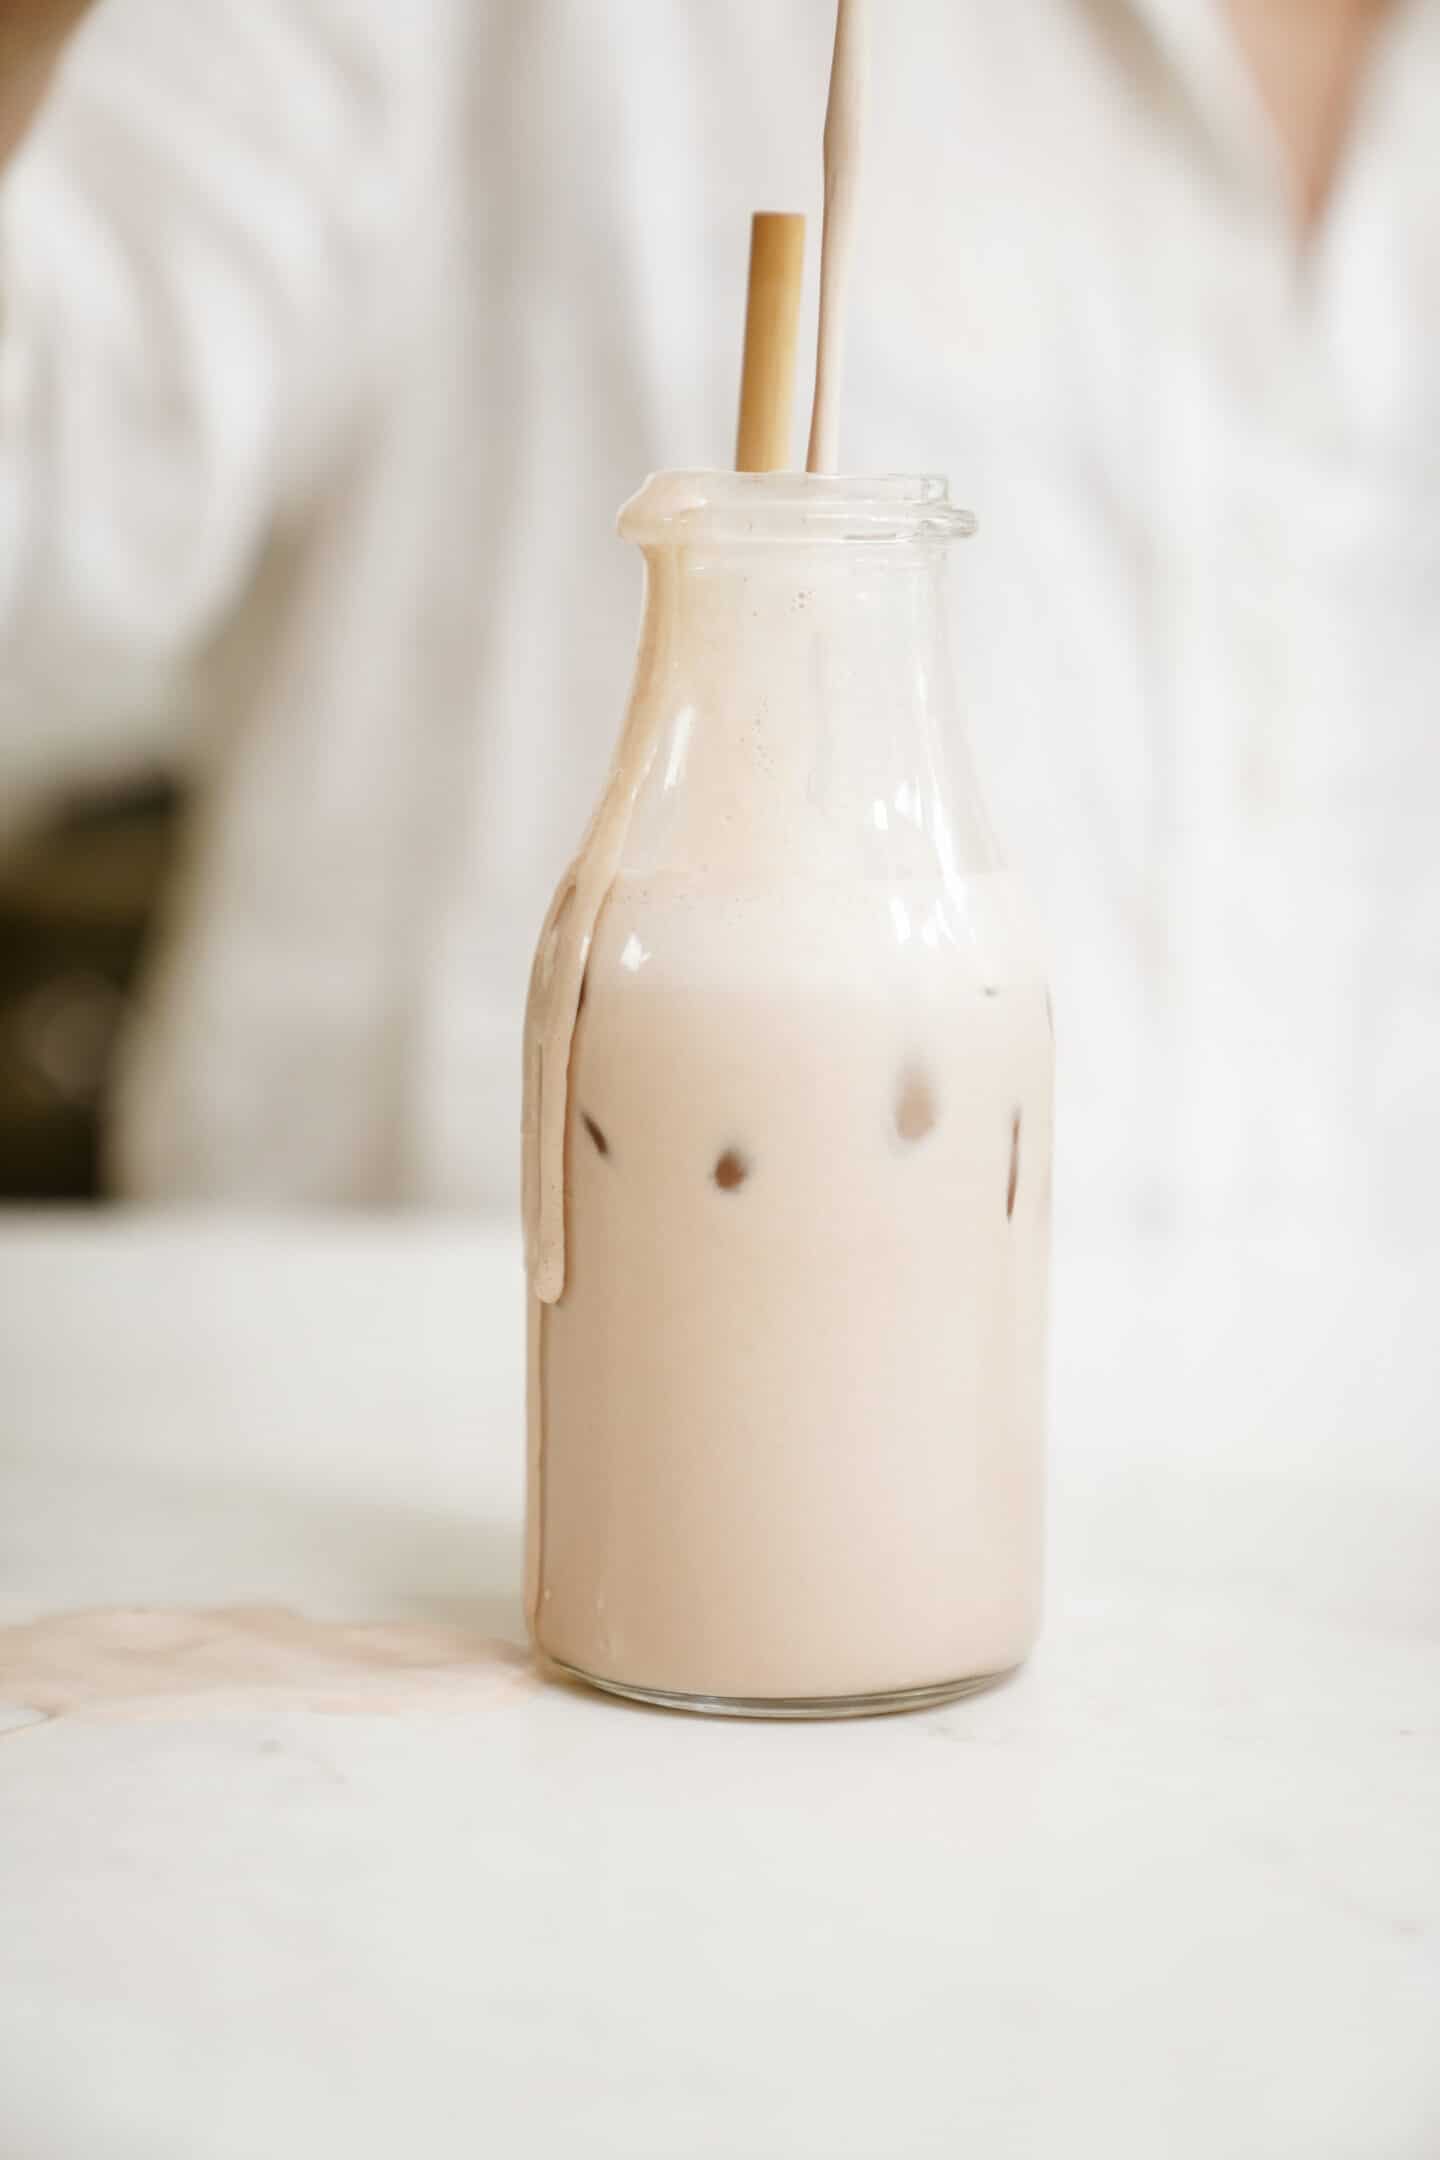 Barista oat milk in a jug on a countertop.